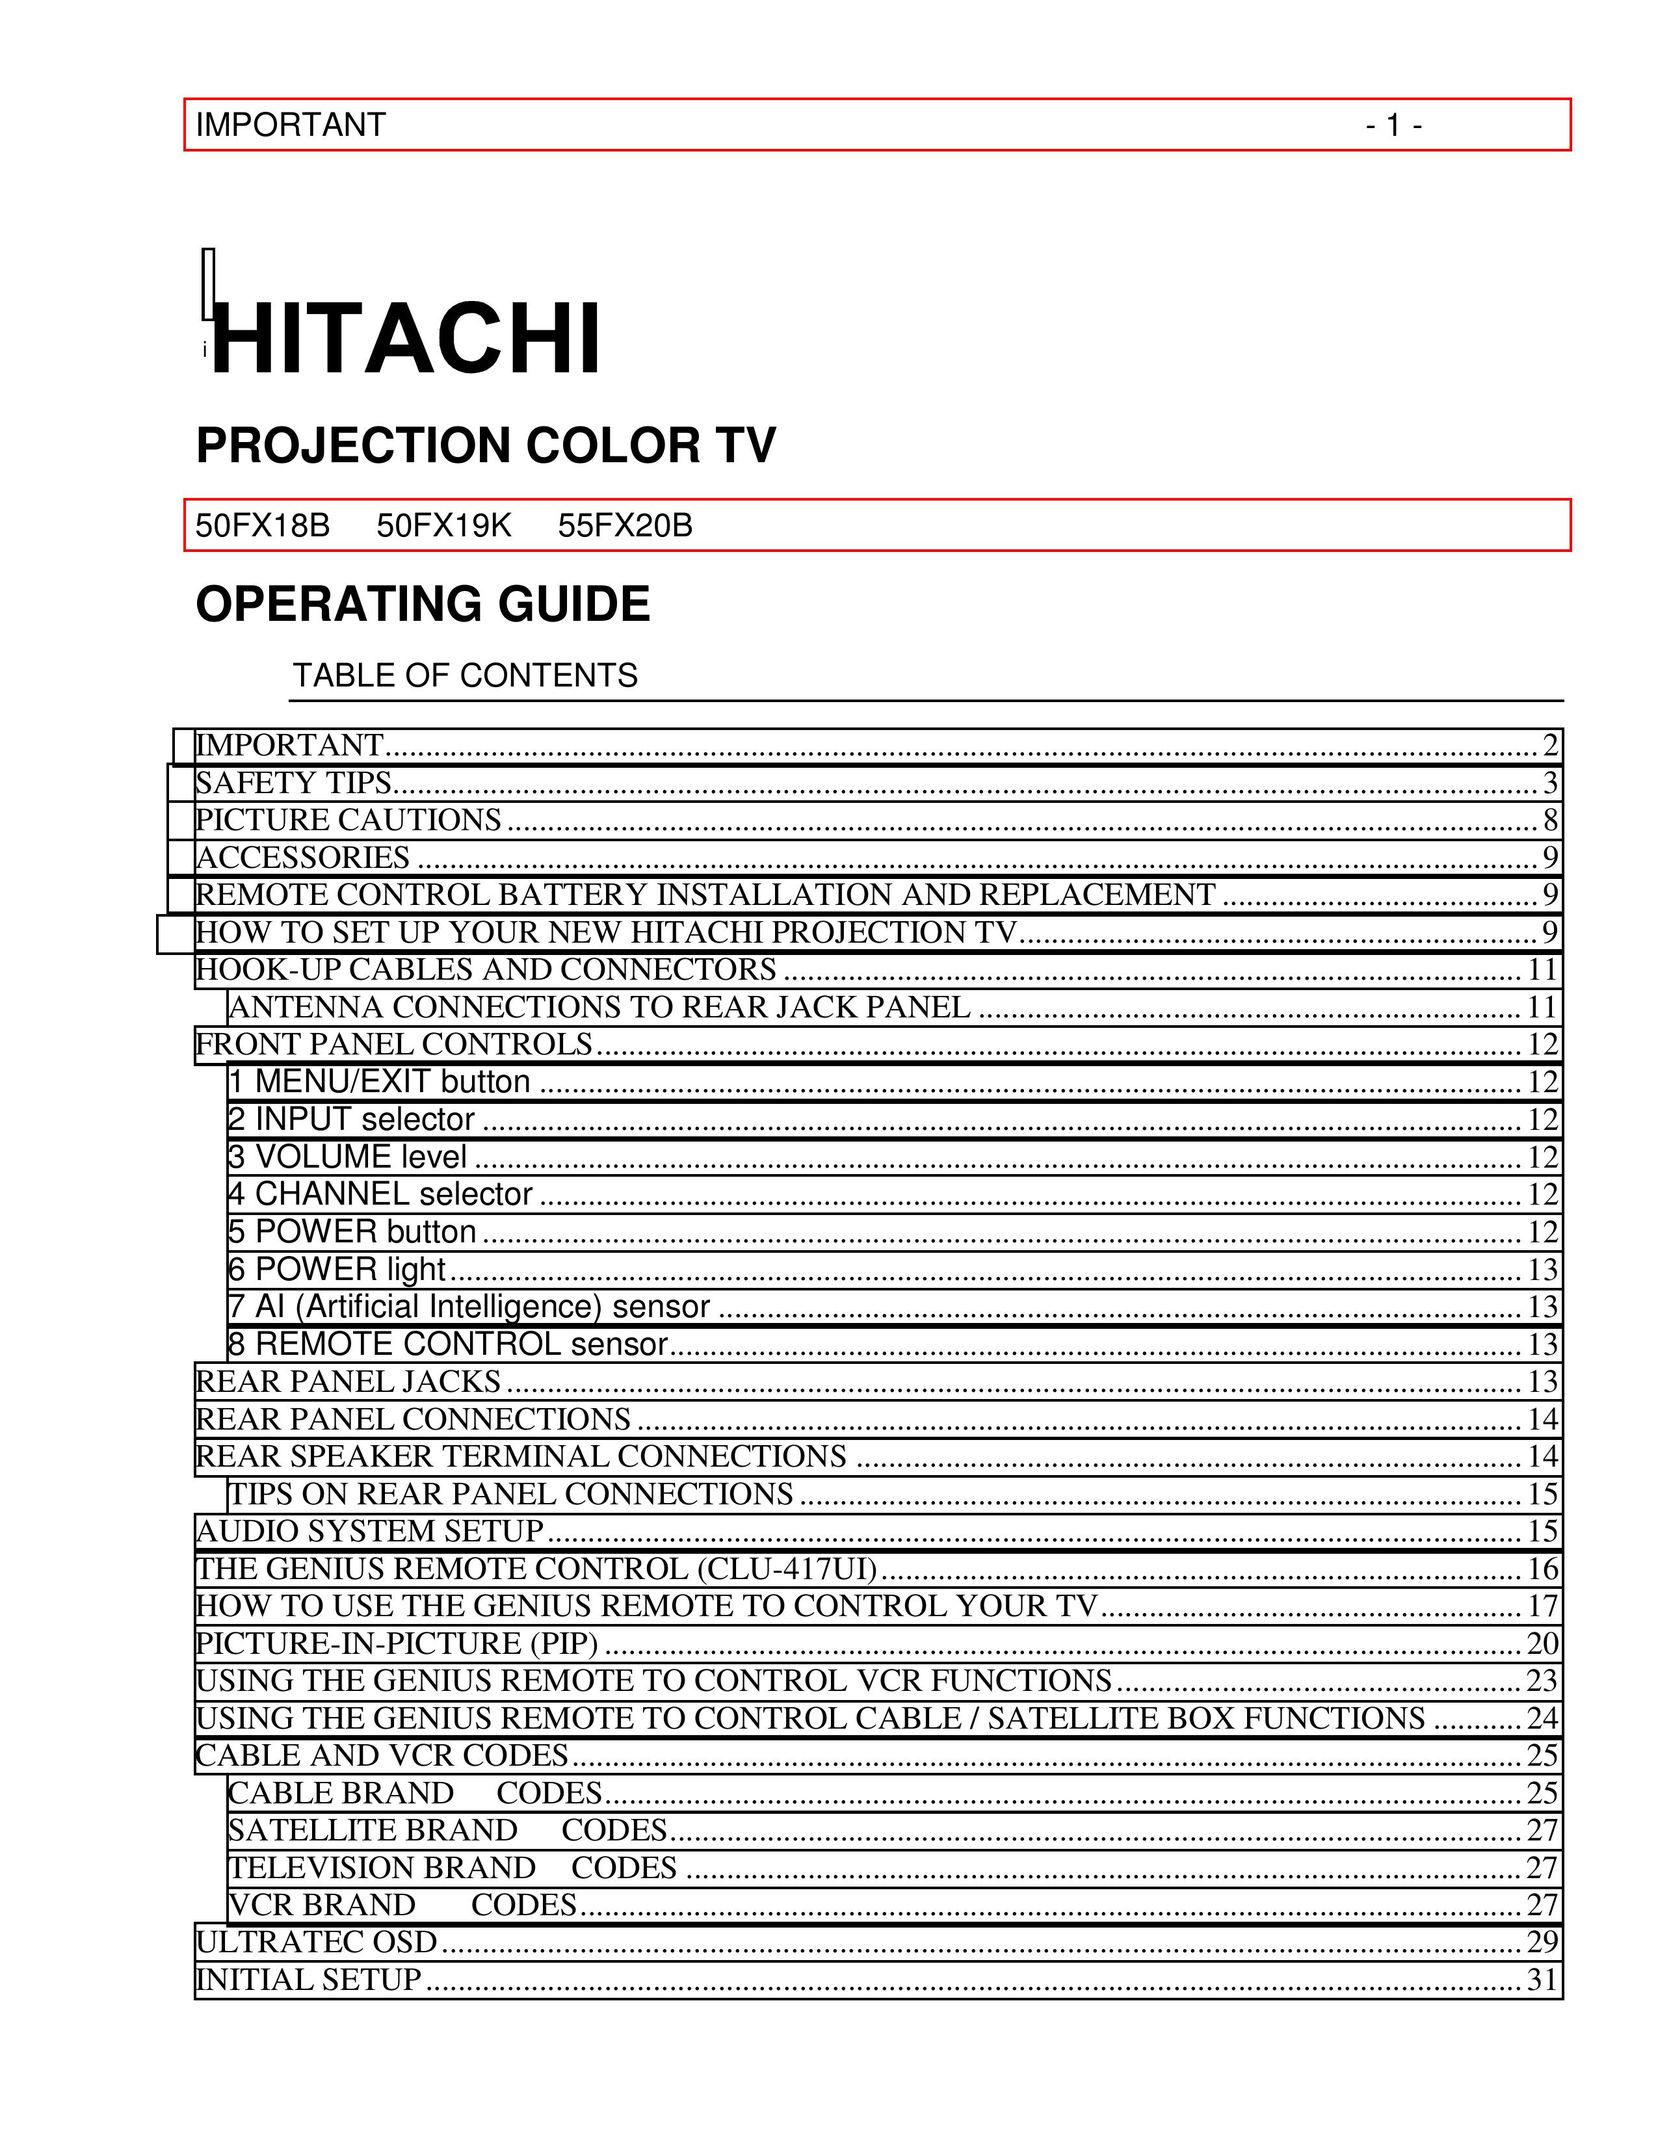 Hitachi 55FX20B CRT Television User Manual